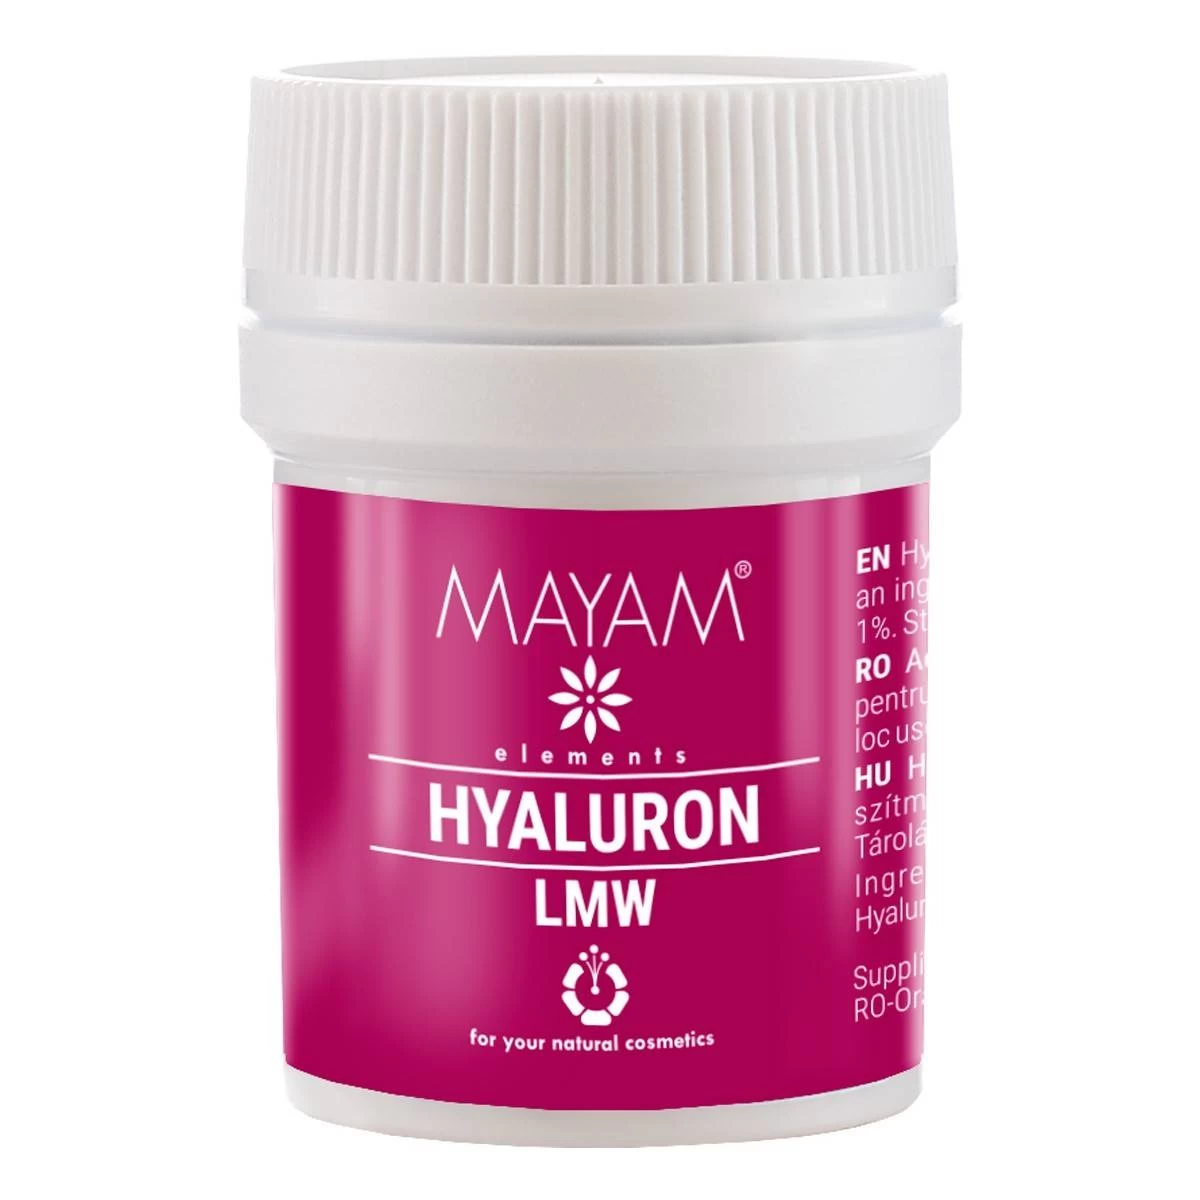 Acid hialuronic pur, lmw, 10g - mayam